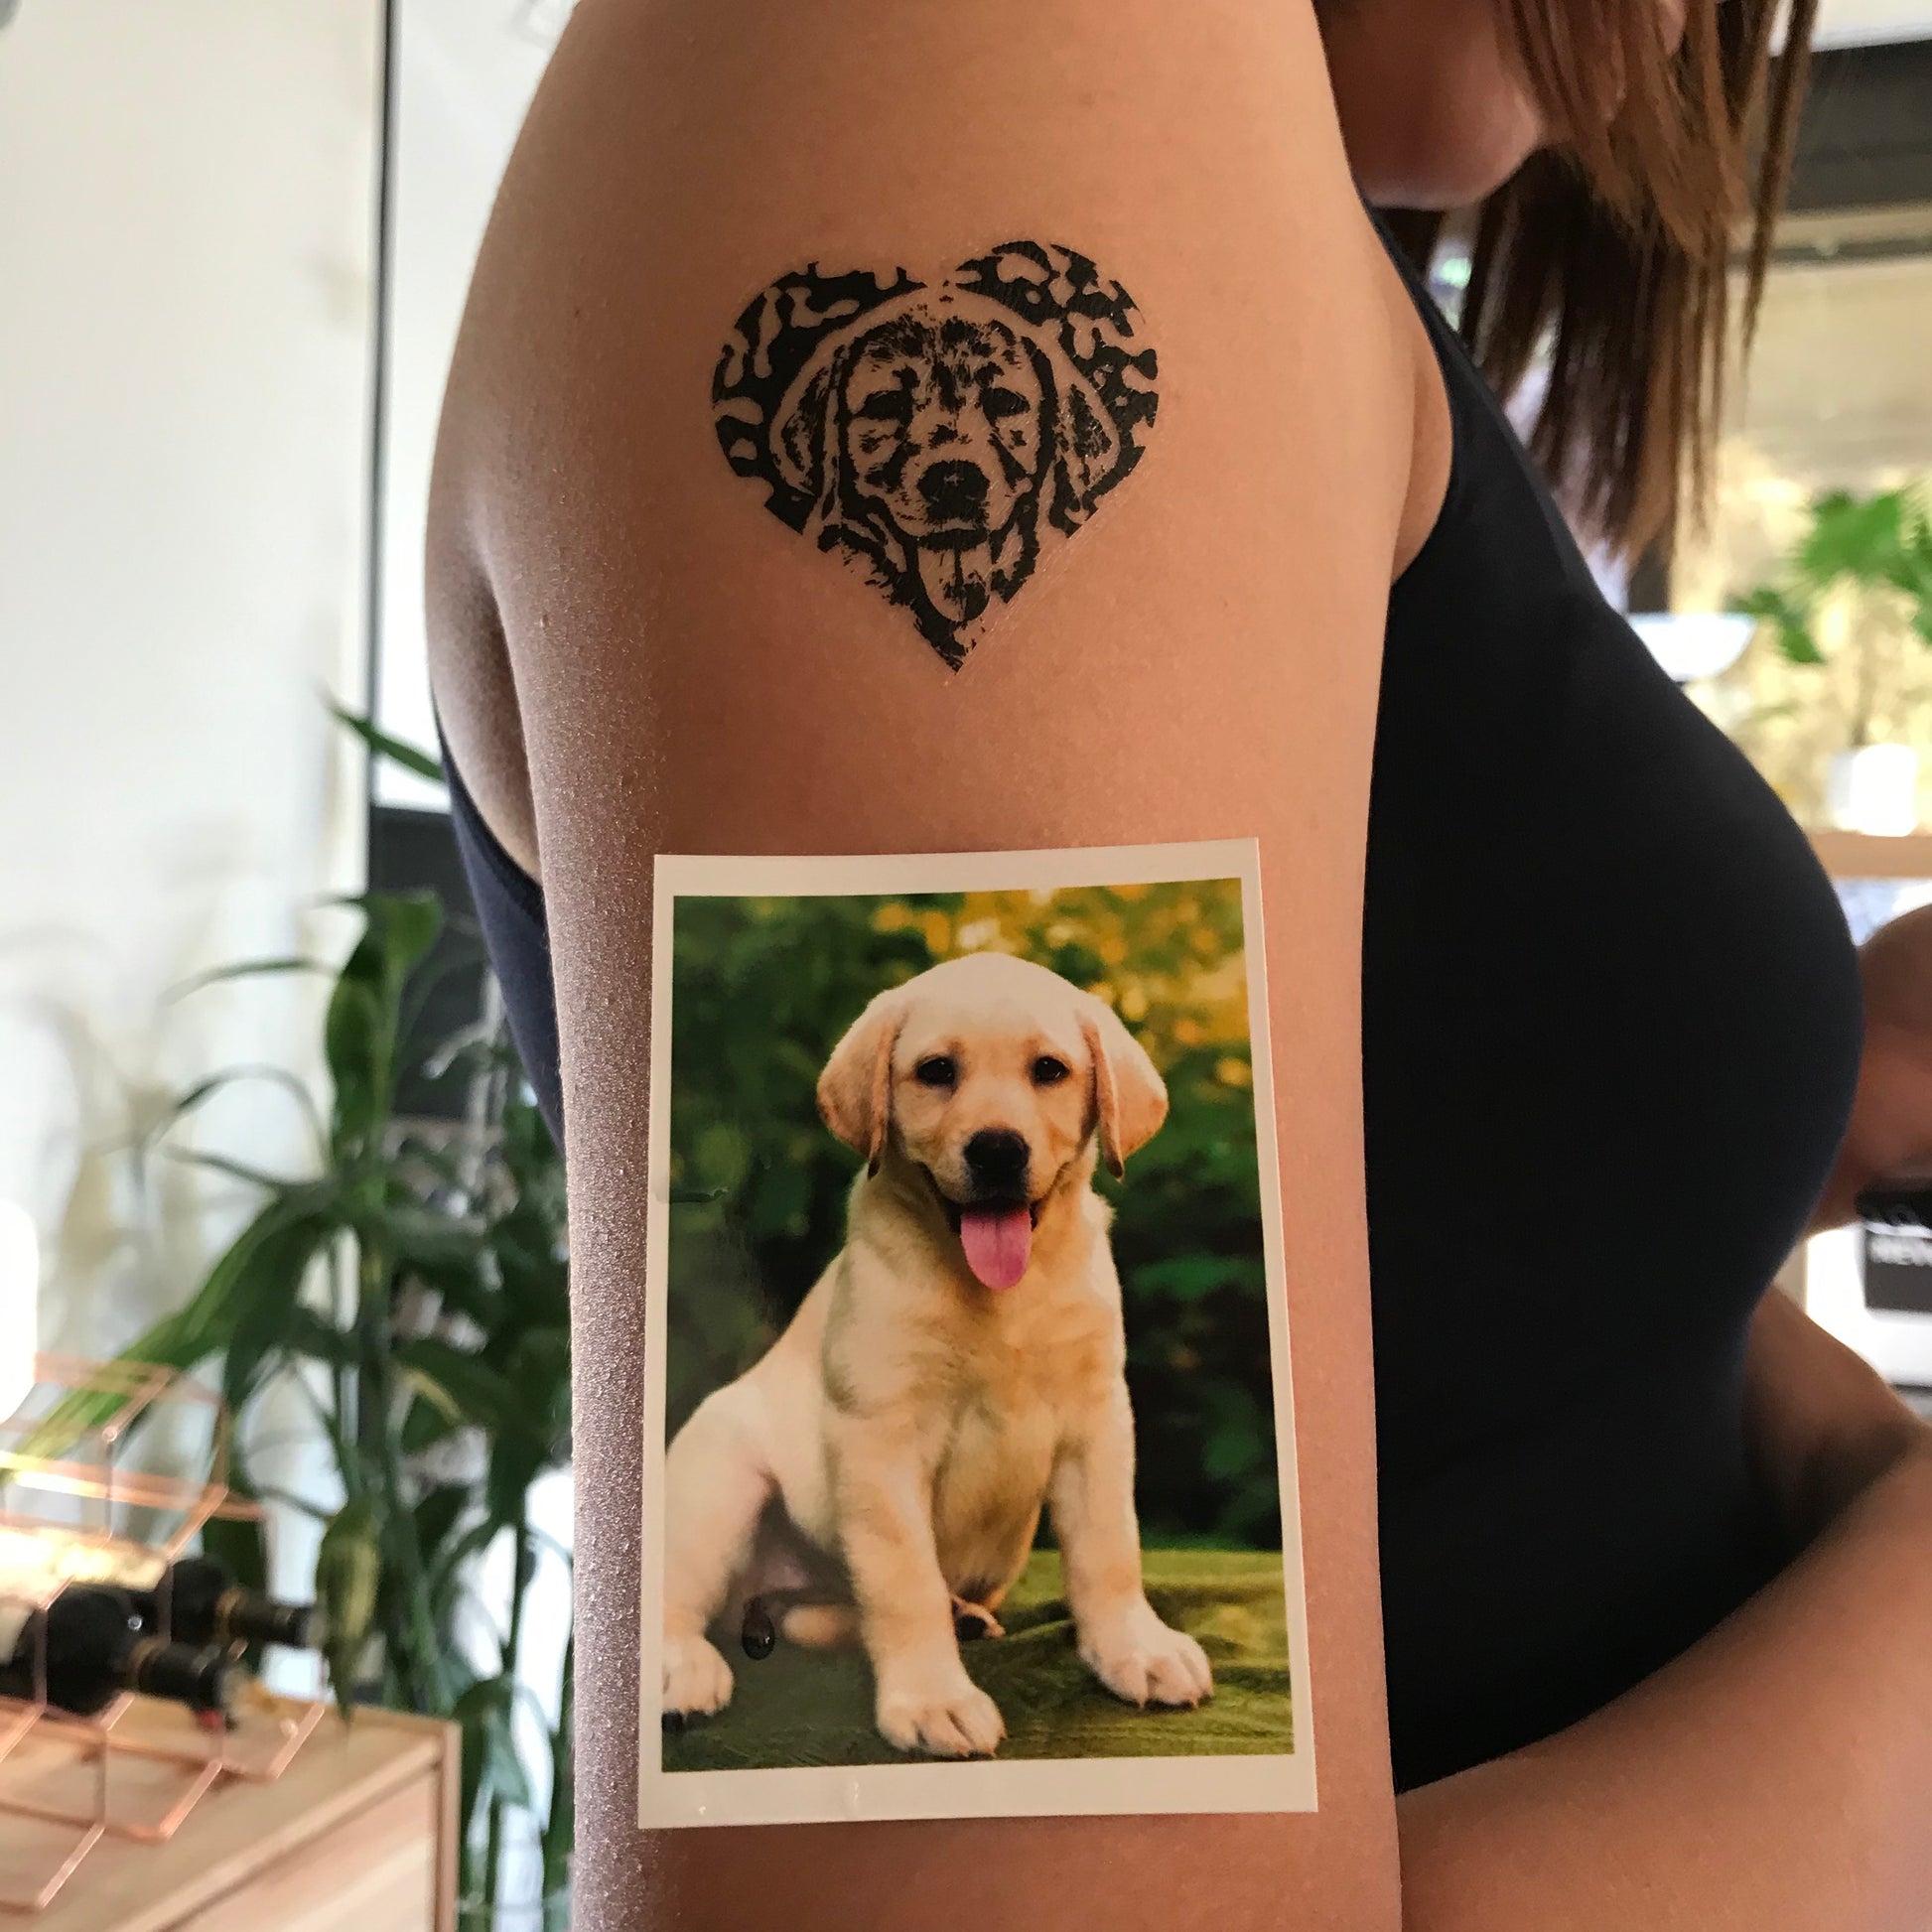 OhMyTat - fake small custom dog pet temporary tattoo sticker heart print effect style design idea on upper arm